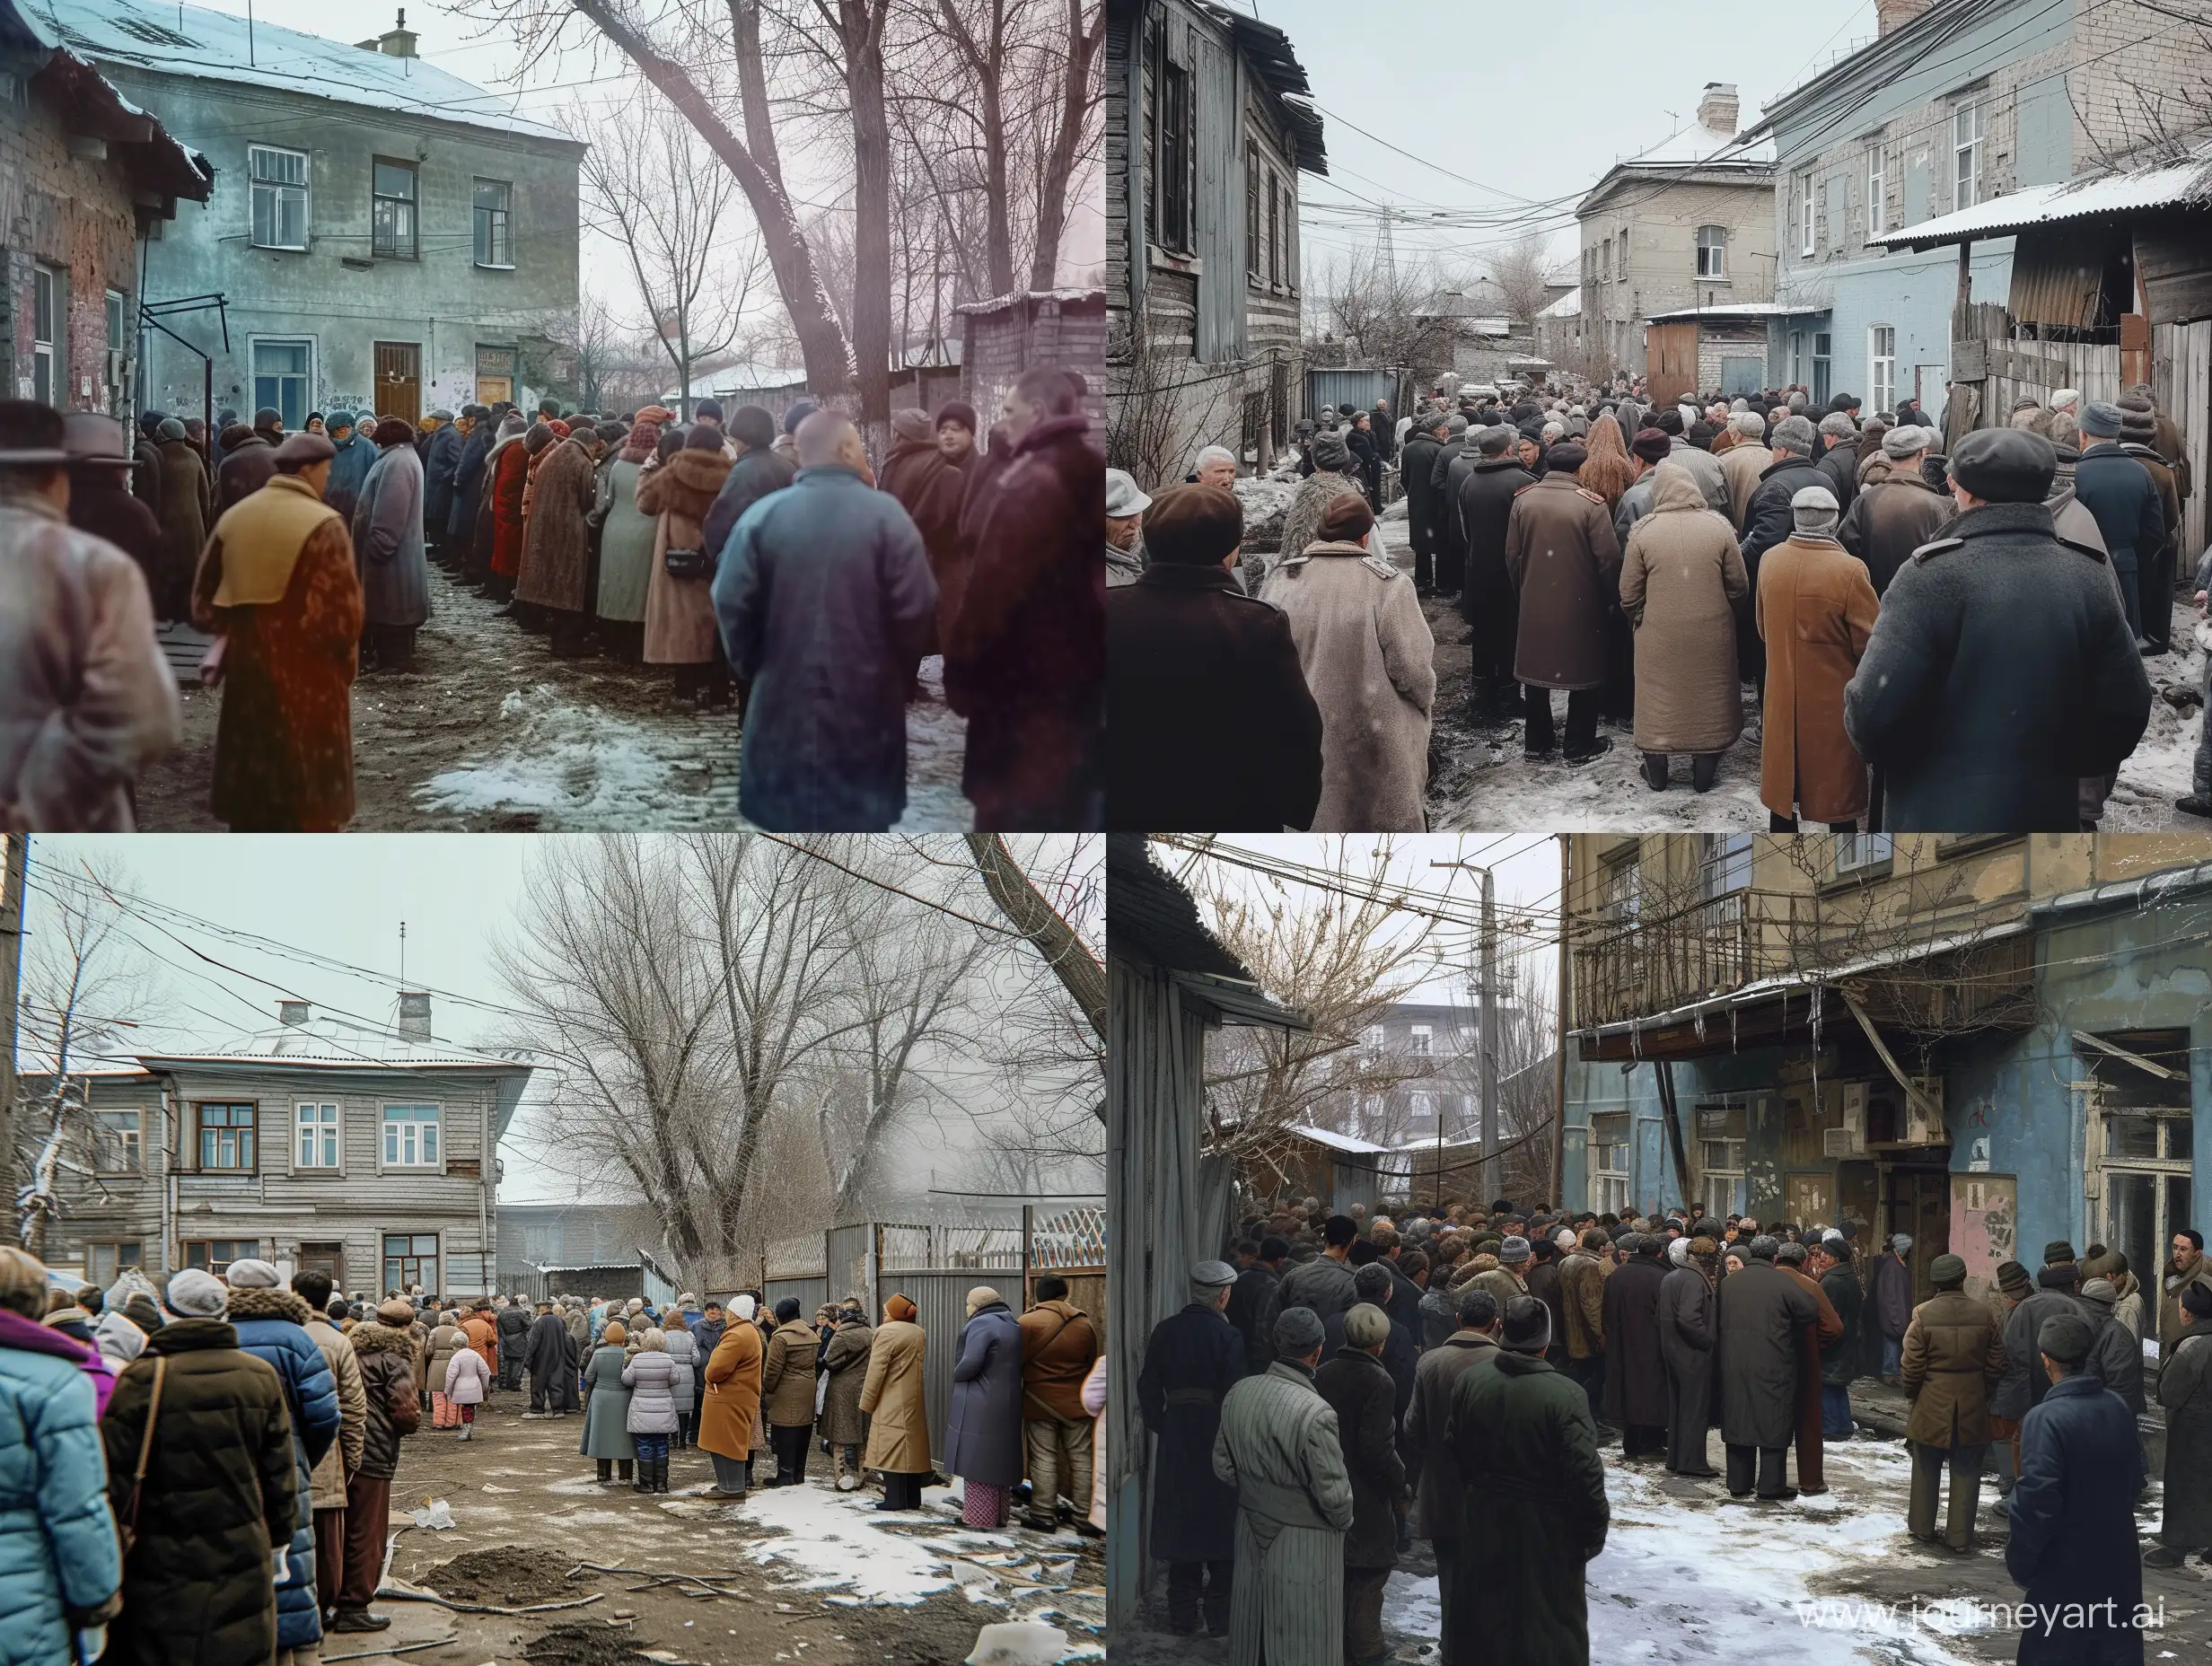 Crowded-Courtyard-Gathering-in-Urban-Russian-Winter-Scene